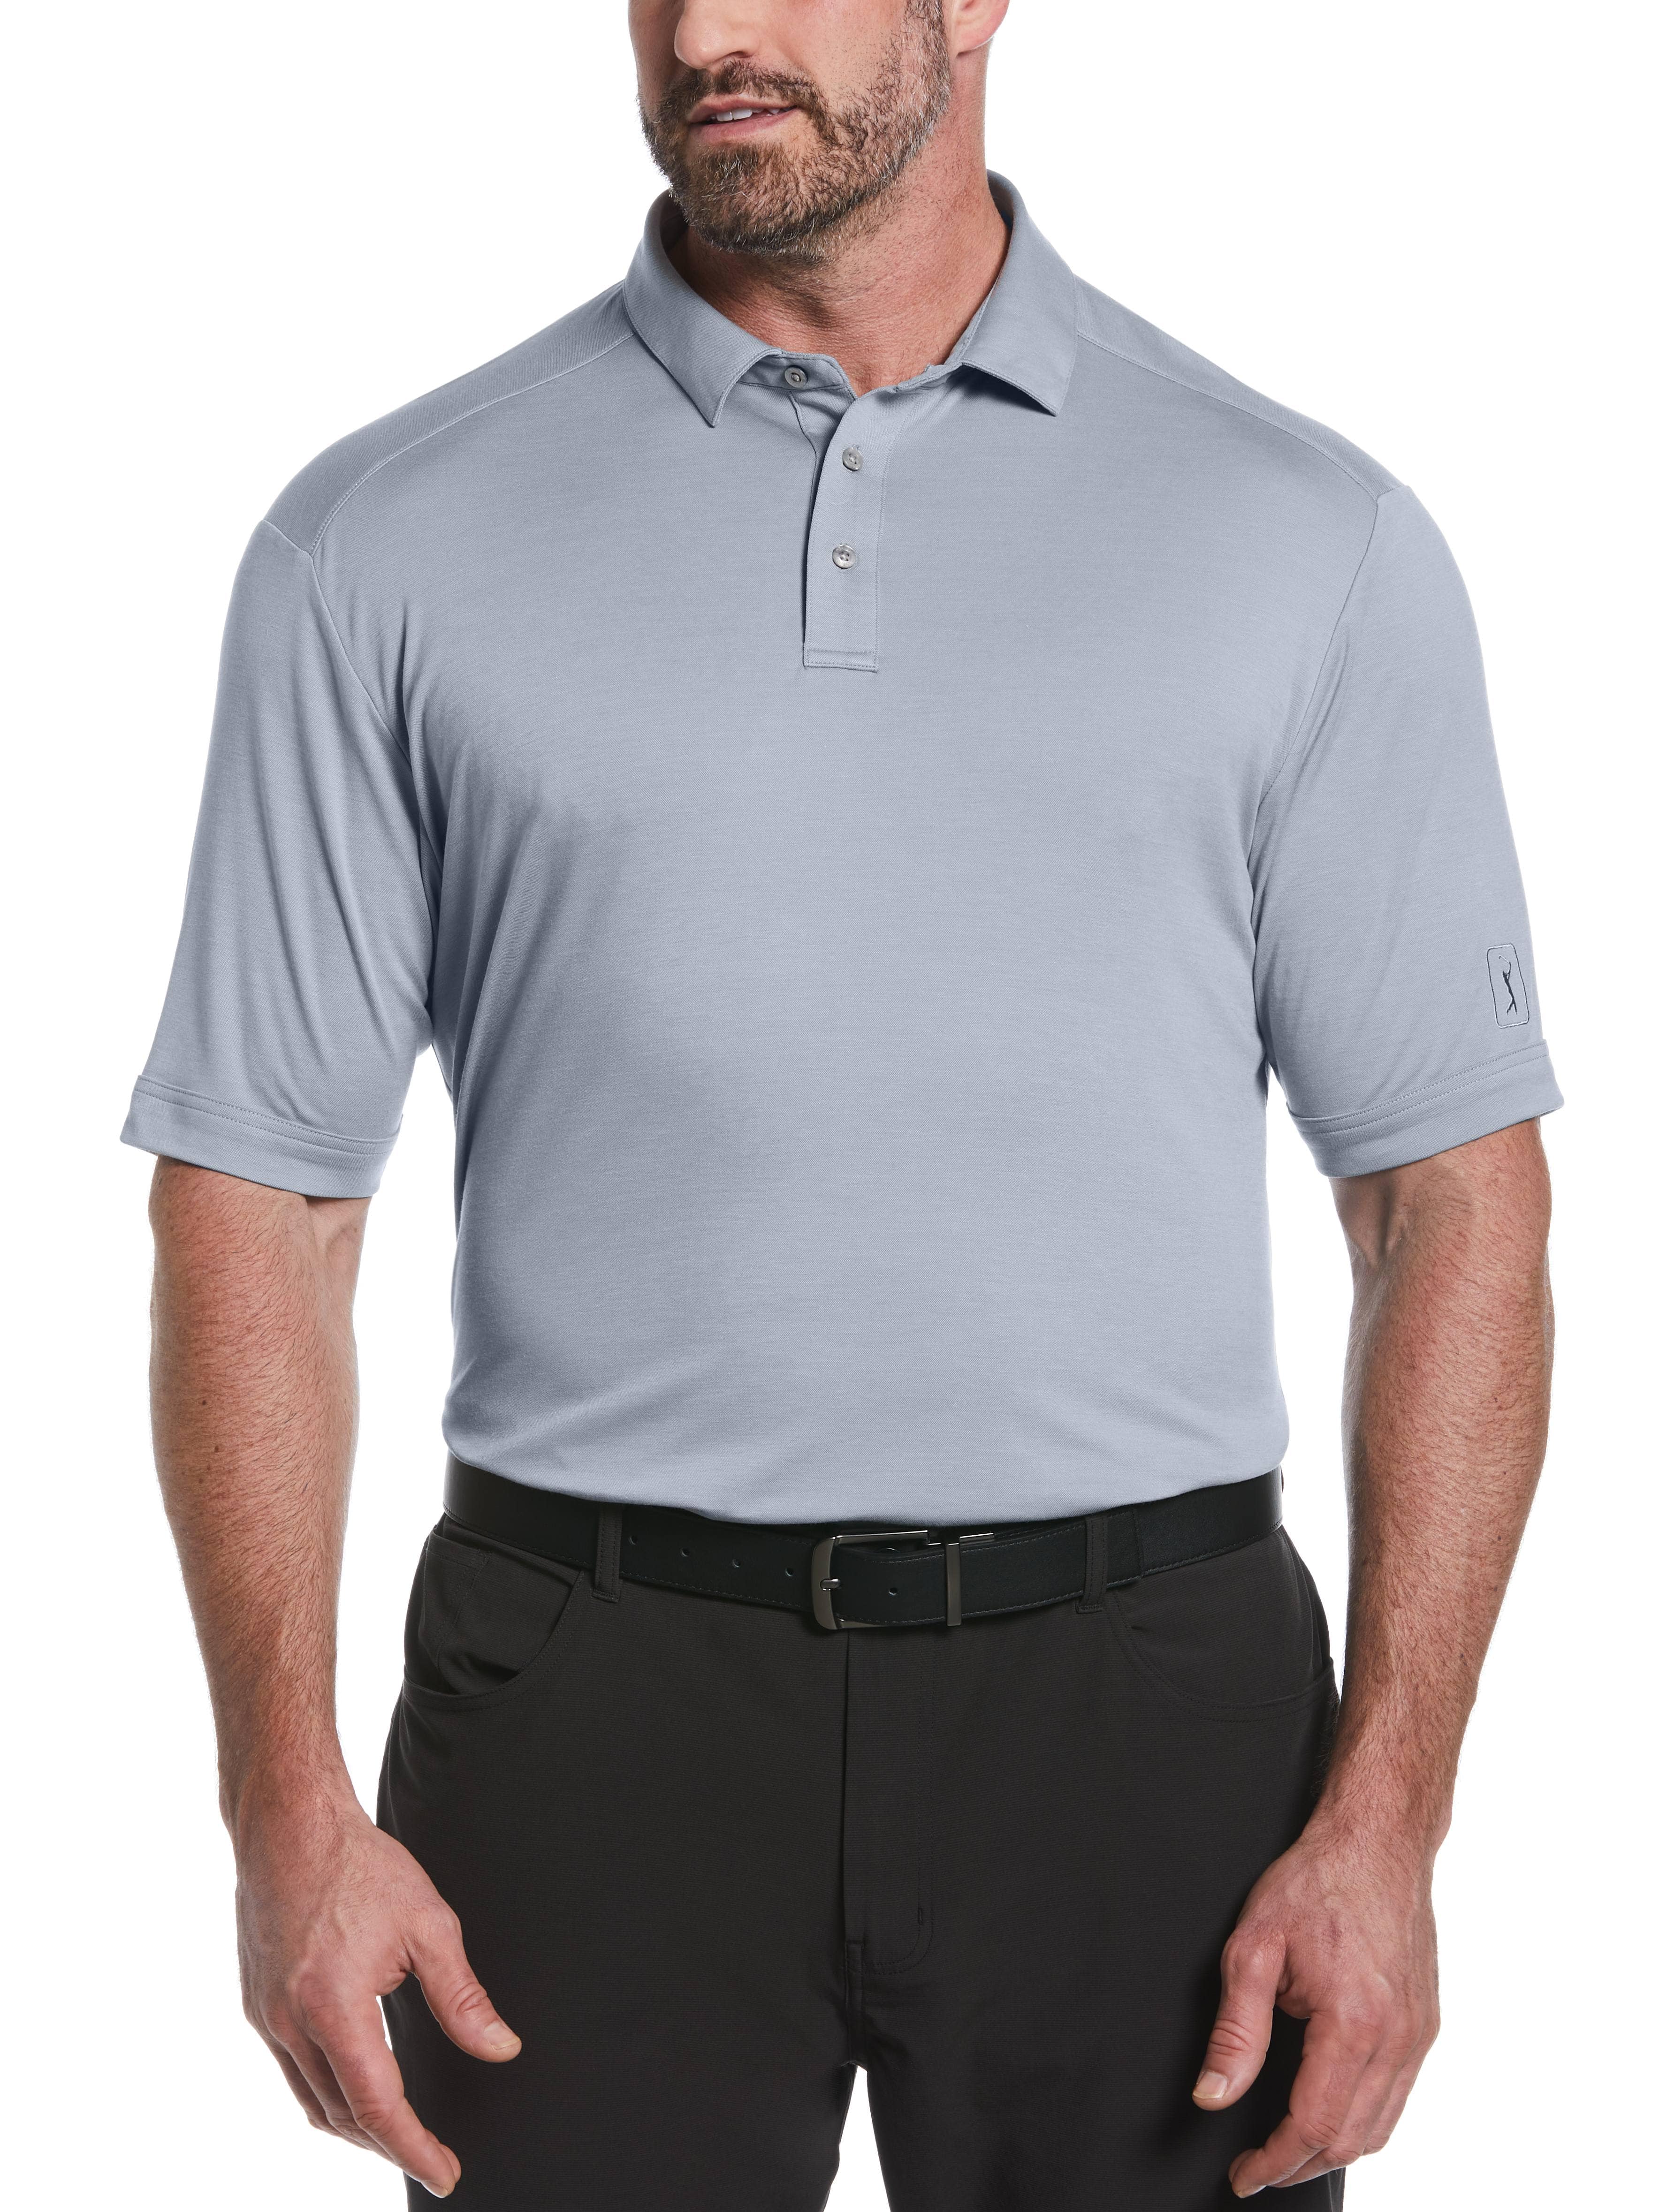 PGA TOUR Apparel Mens Big & Tall Solid Golf Polo Shirt, Size LT, Tradewinds Heather Gray, Polyester/Viscose/Elastane | Golf Apparel Shop